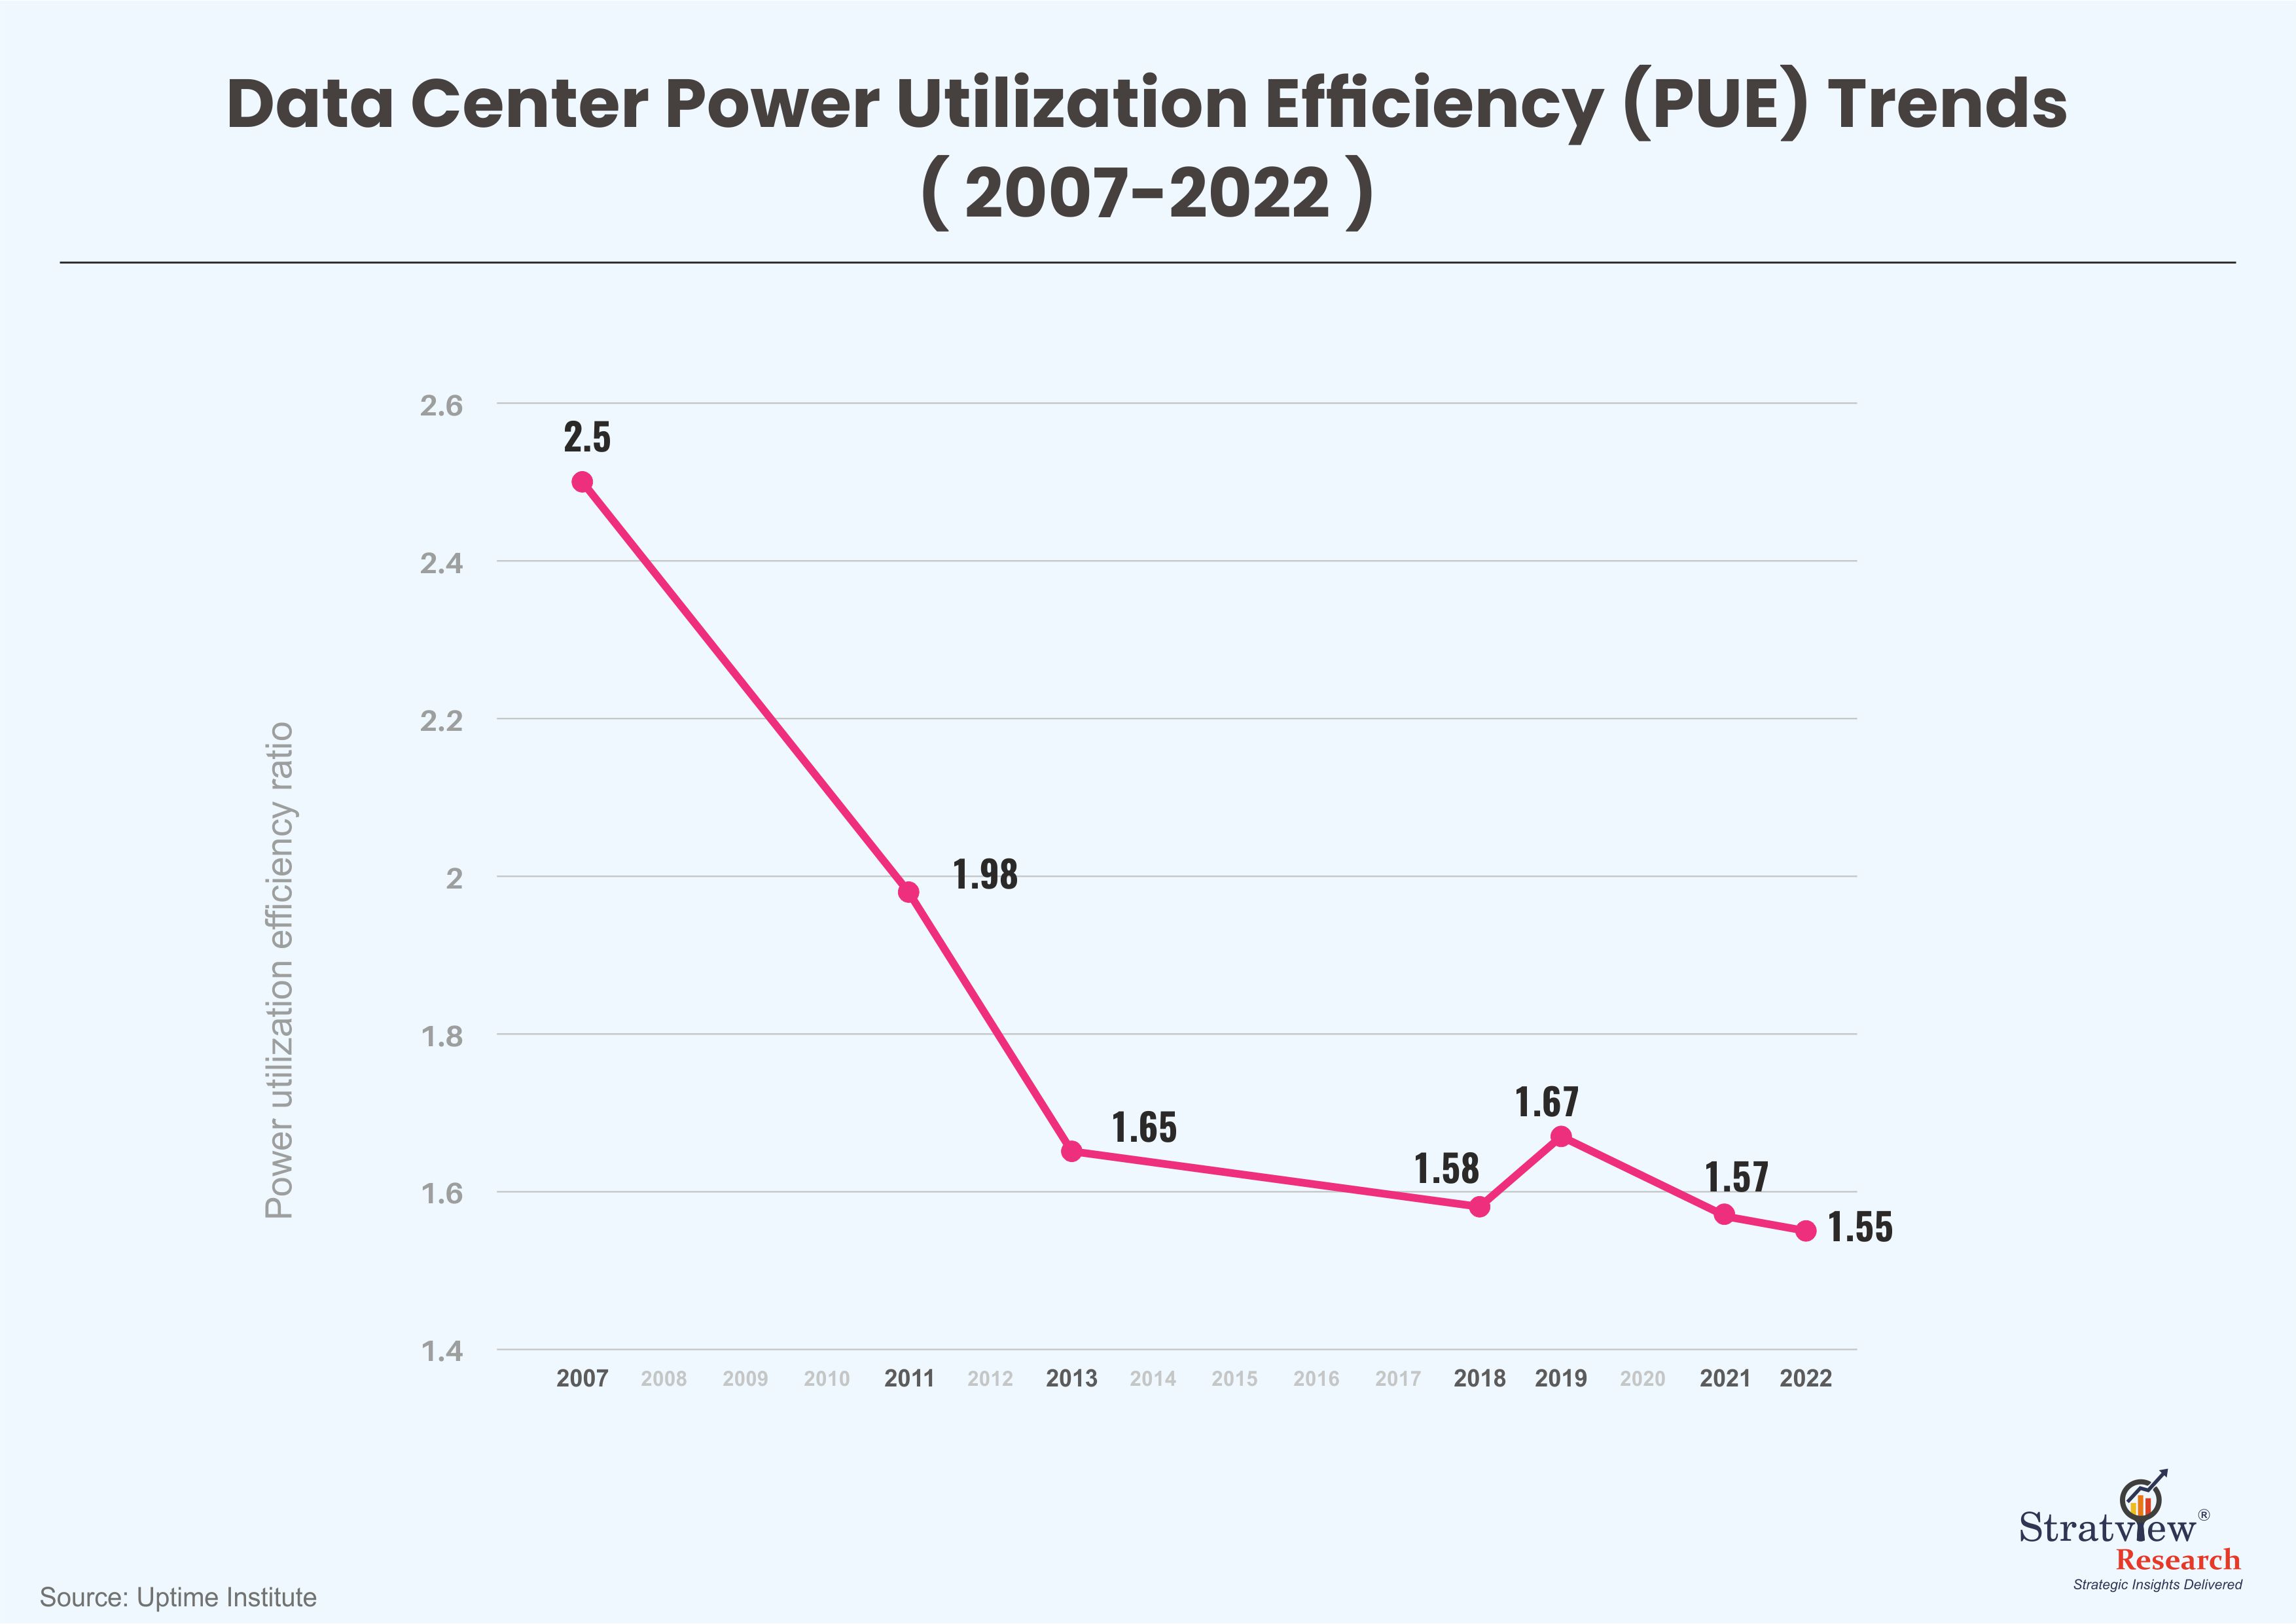 Data Center Power Utilization Efficiency (PUE) Trends, 2007-2022